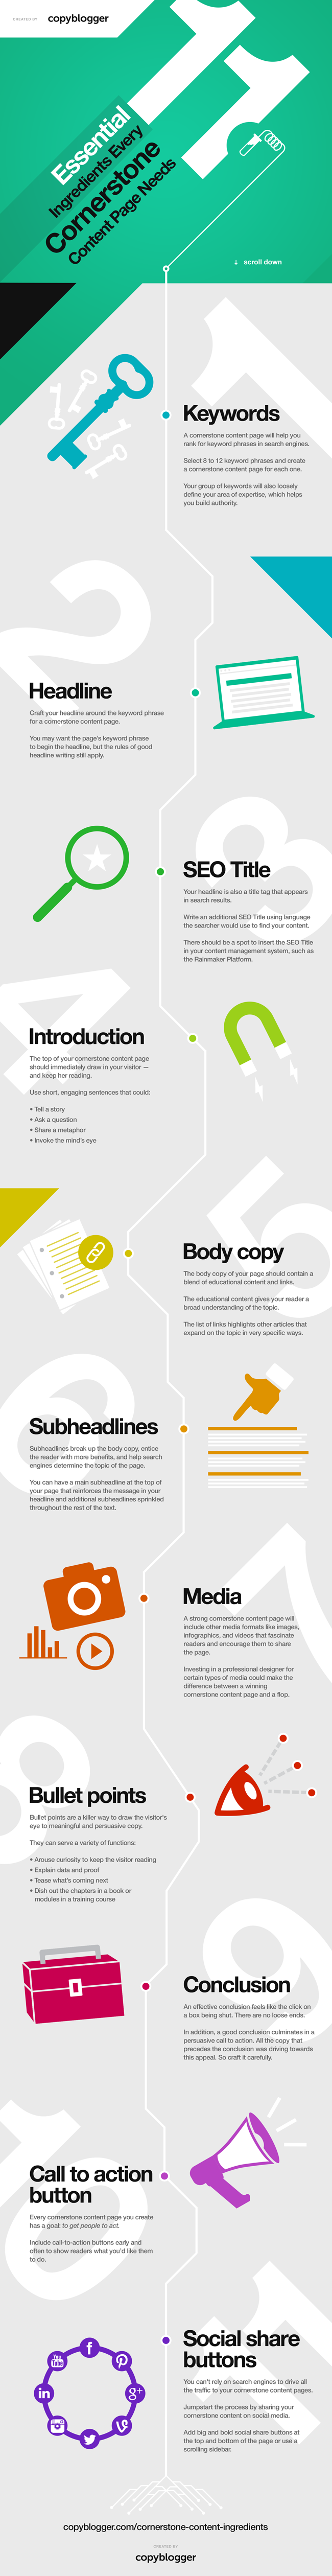 Copyblogger Cornerstone Content Infographic